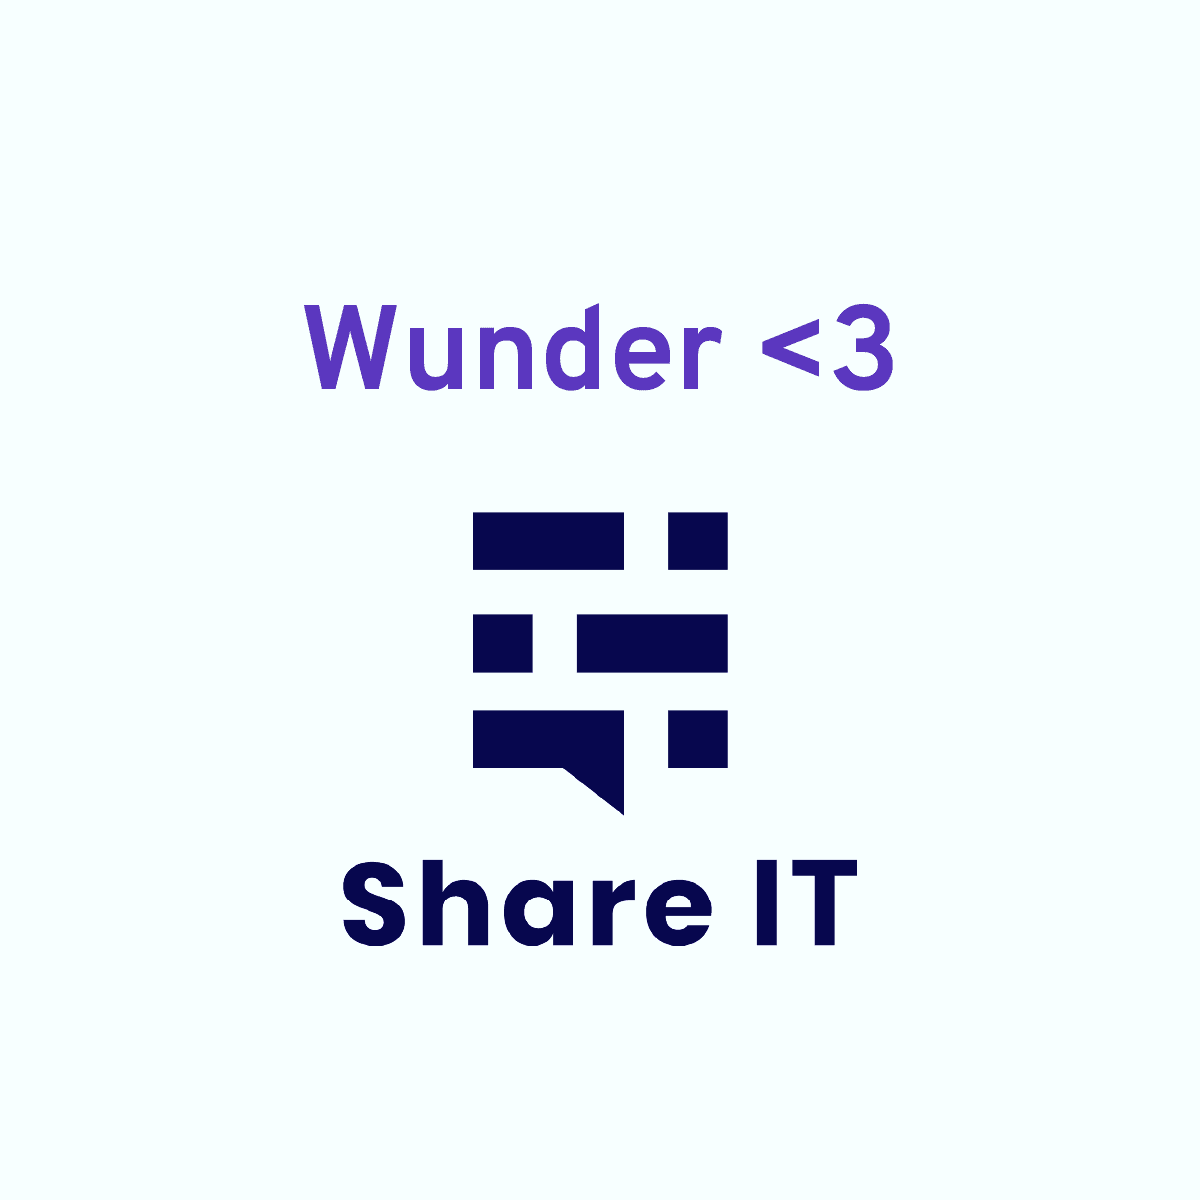 Wunder loves Share IT